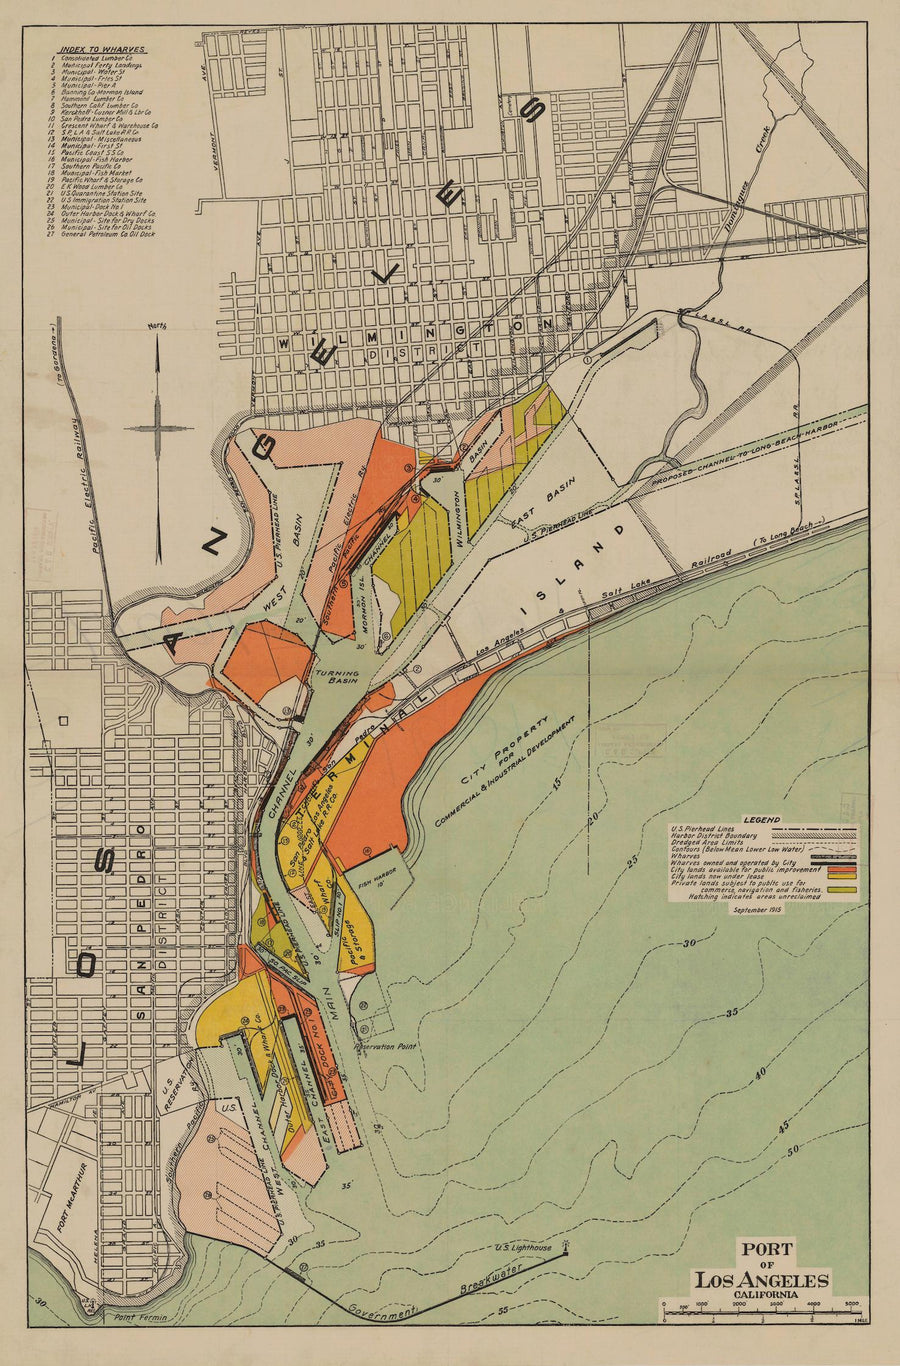 Los Angeles Port Map - 1915